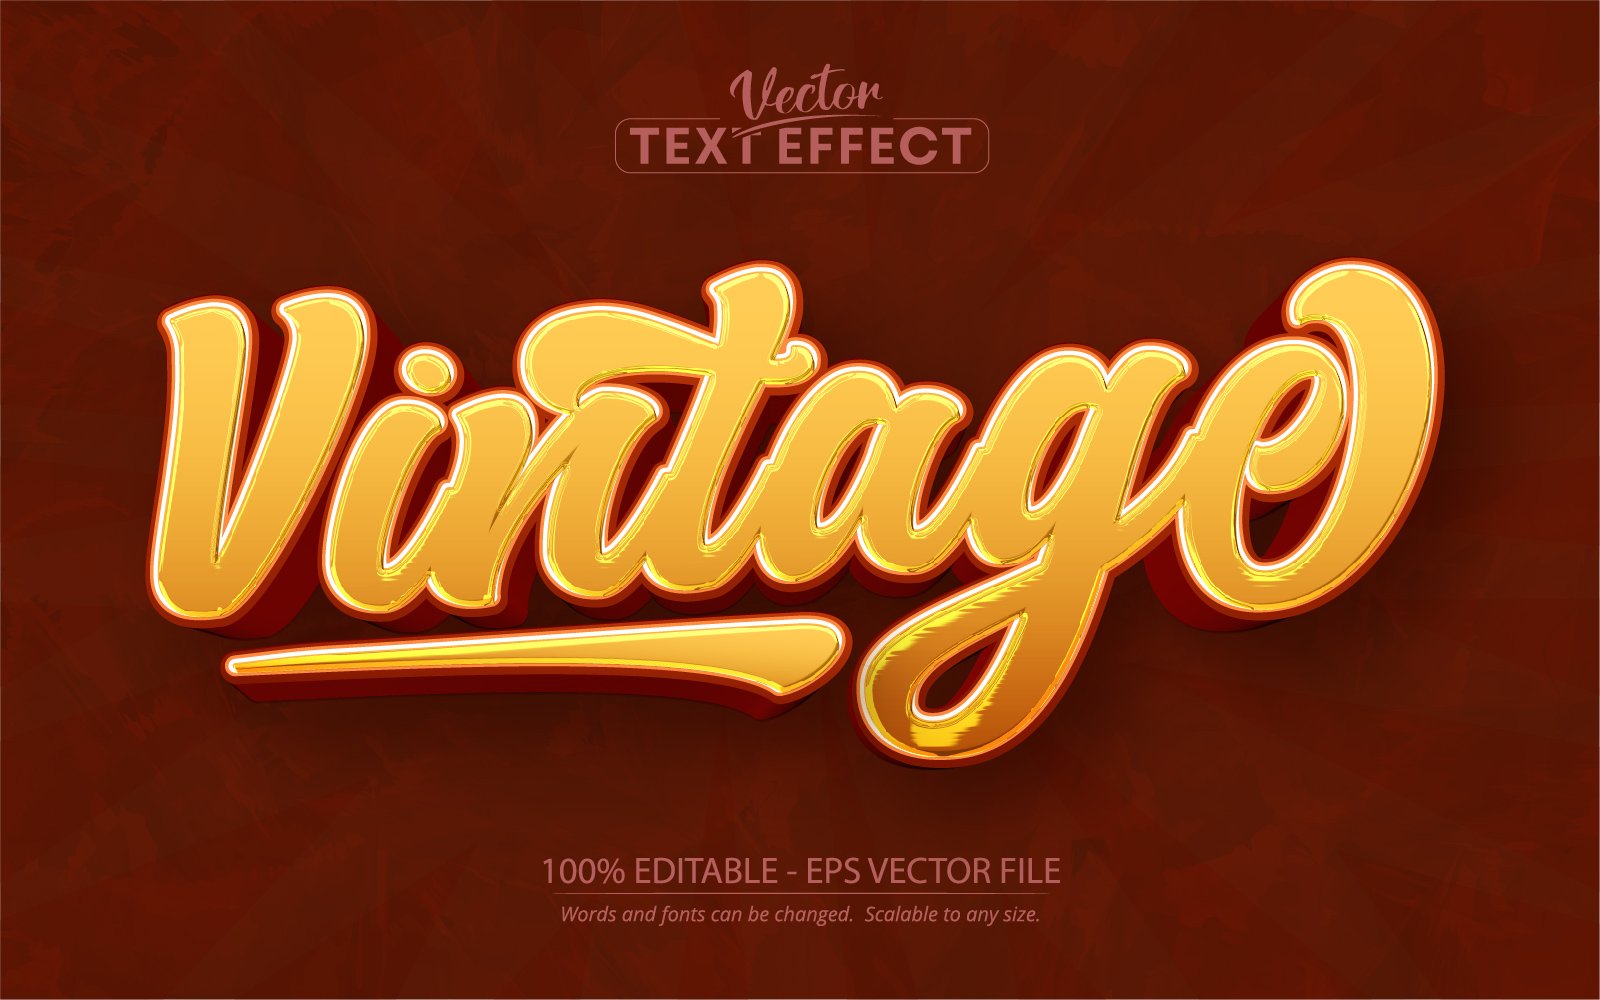 Vintage - Editable Text Effect, 80s Retro Text Style, Graphics Illustration